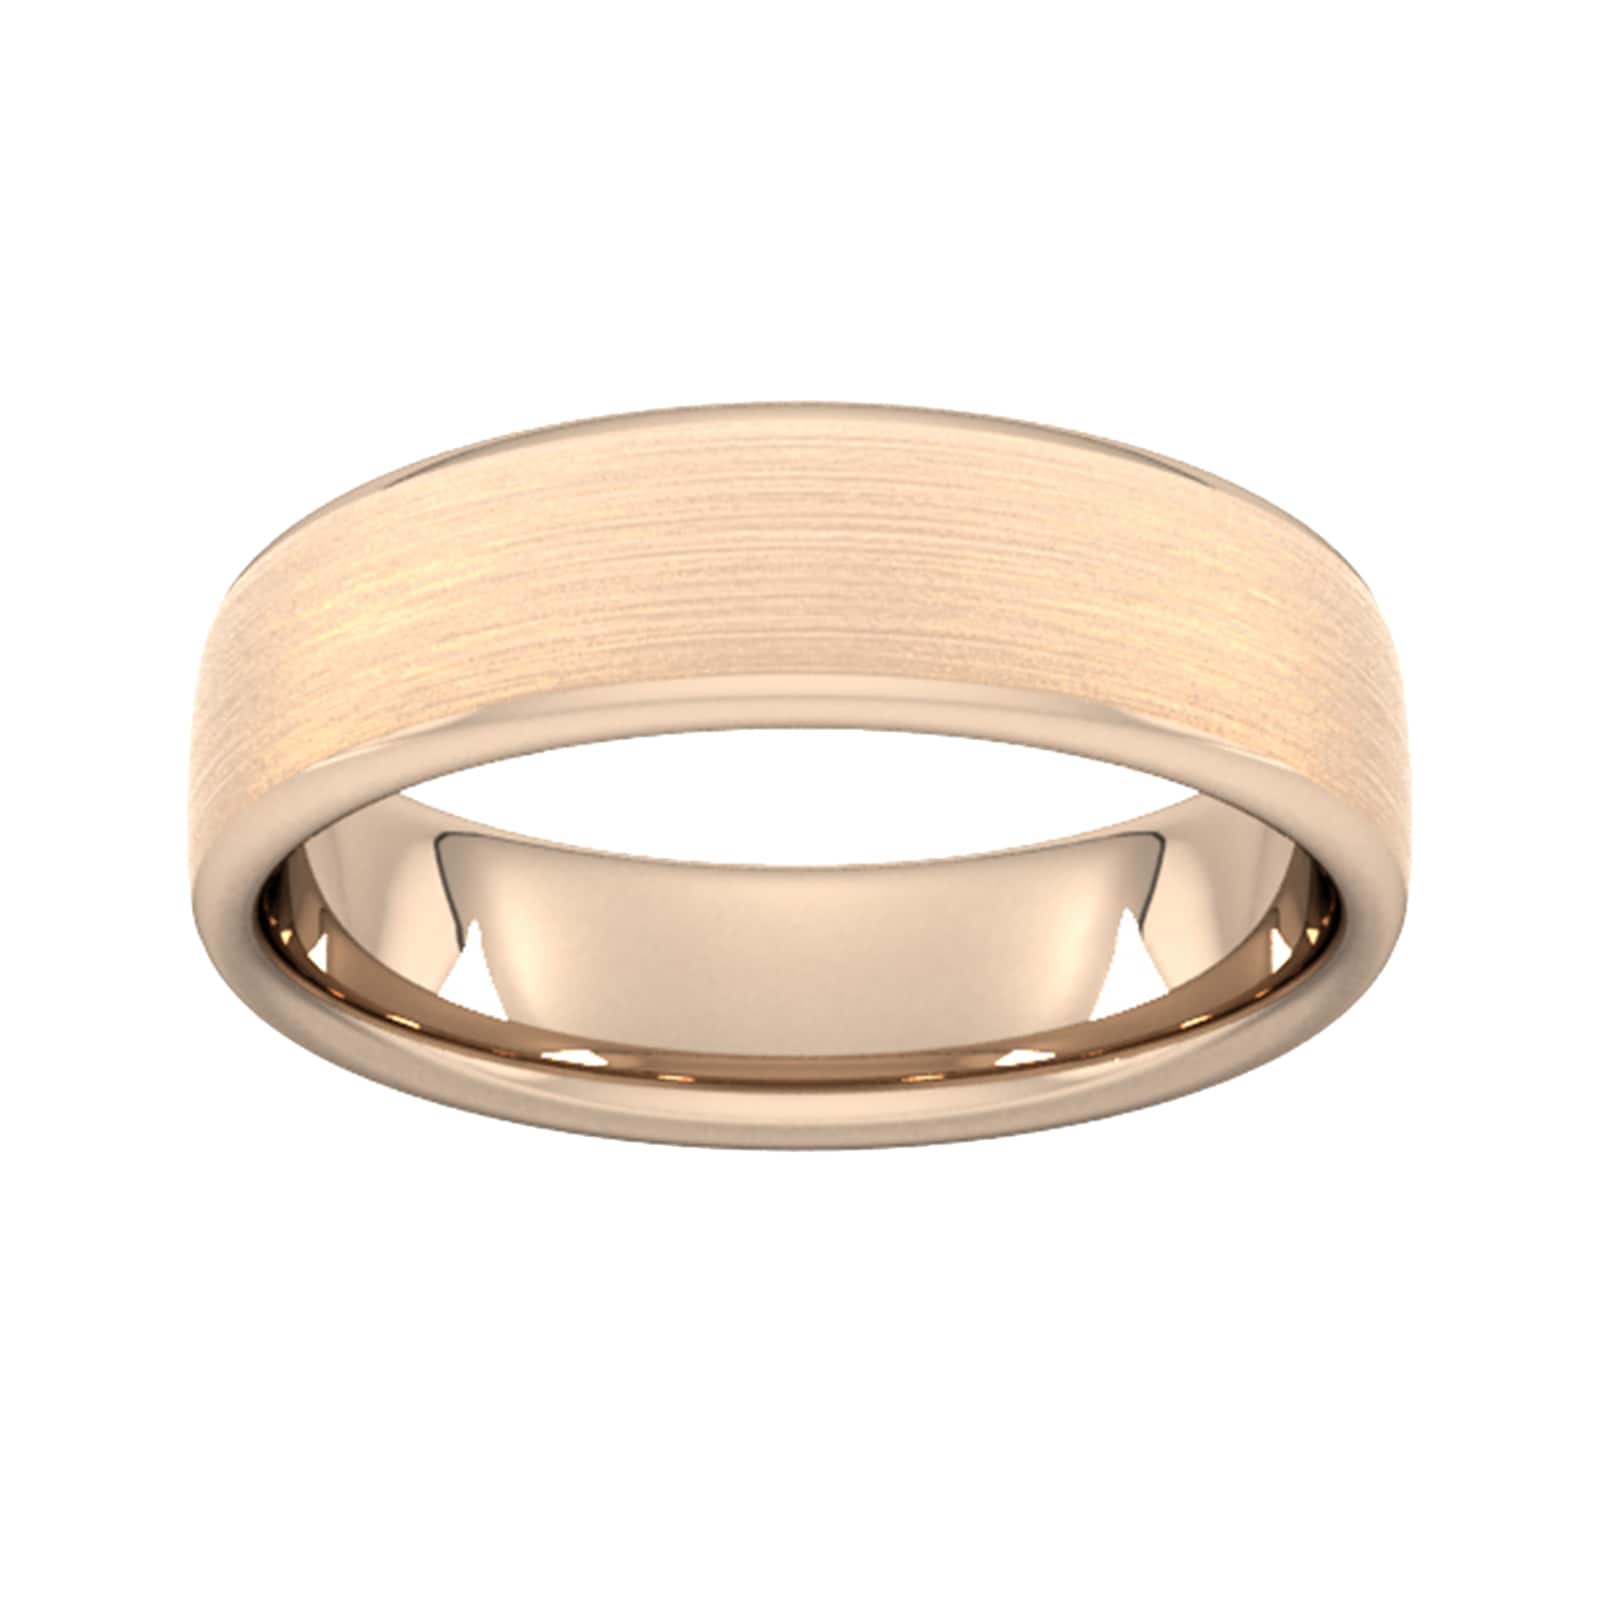 6mm Slight Court Heavy Matt Finished Wedding Ring In 9 Carat Rose Gold - Ring Size L